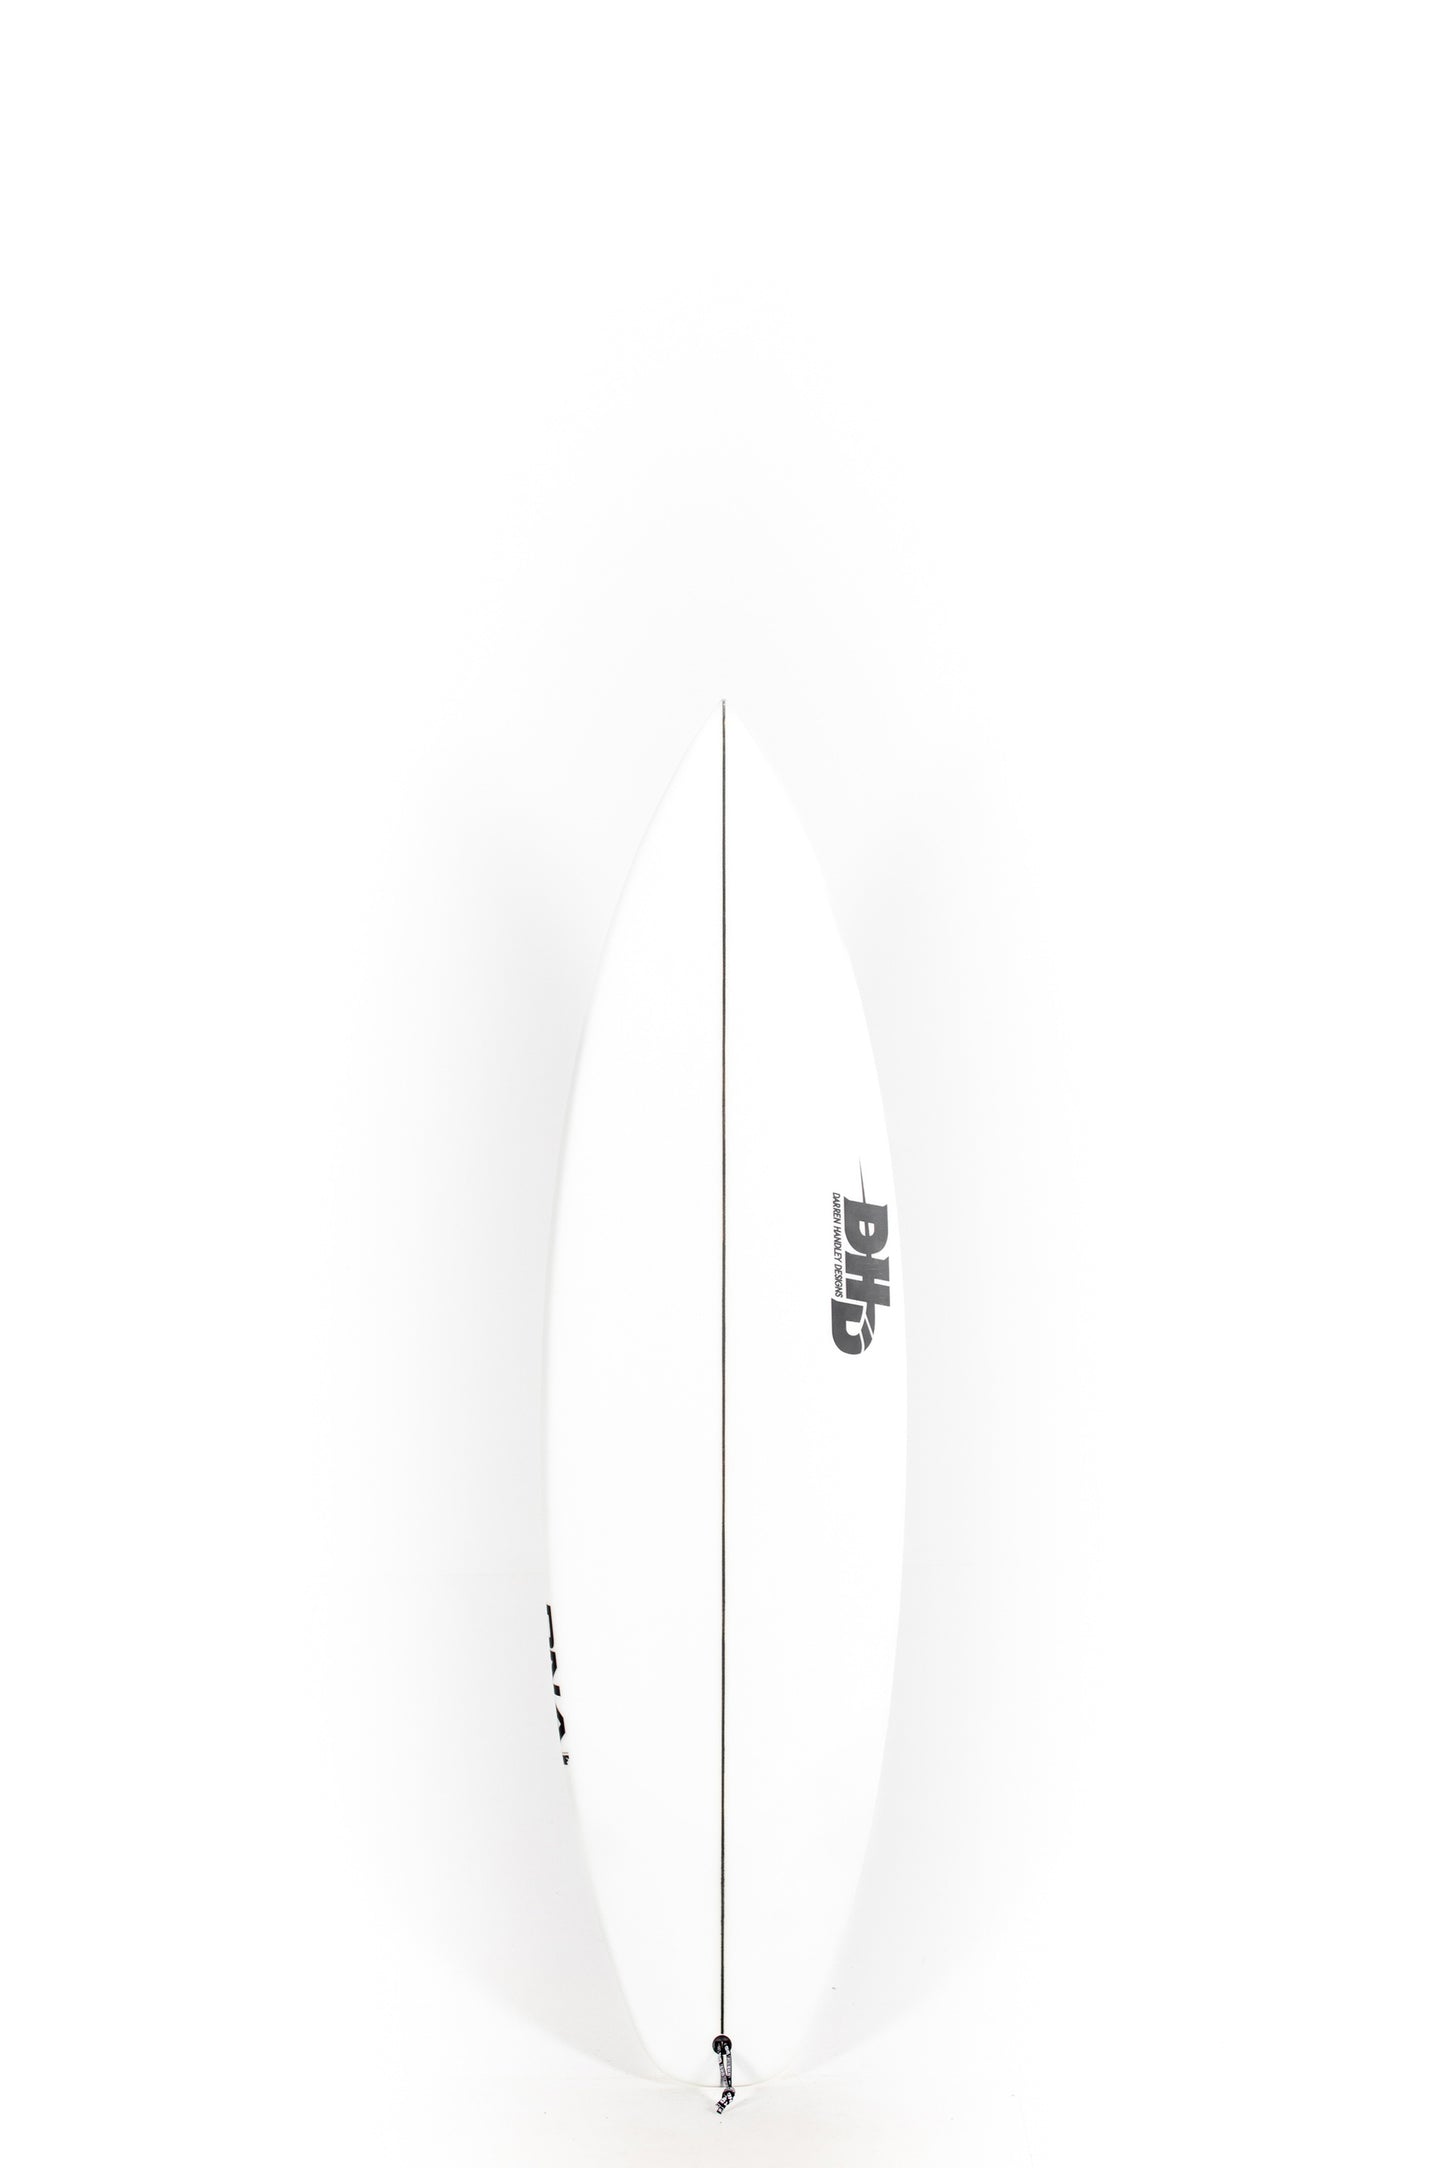 Pukas Surf Shop - DHD - DNA by Darren Handley - 5'11" x 18 3/4 x 2 5/16 x 27,5L - DHDDNA511